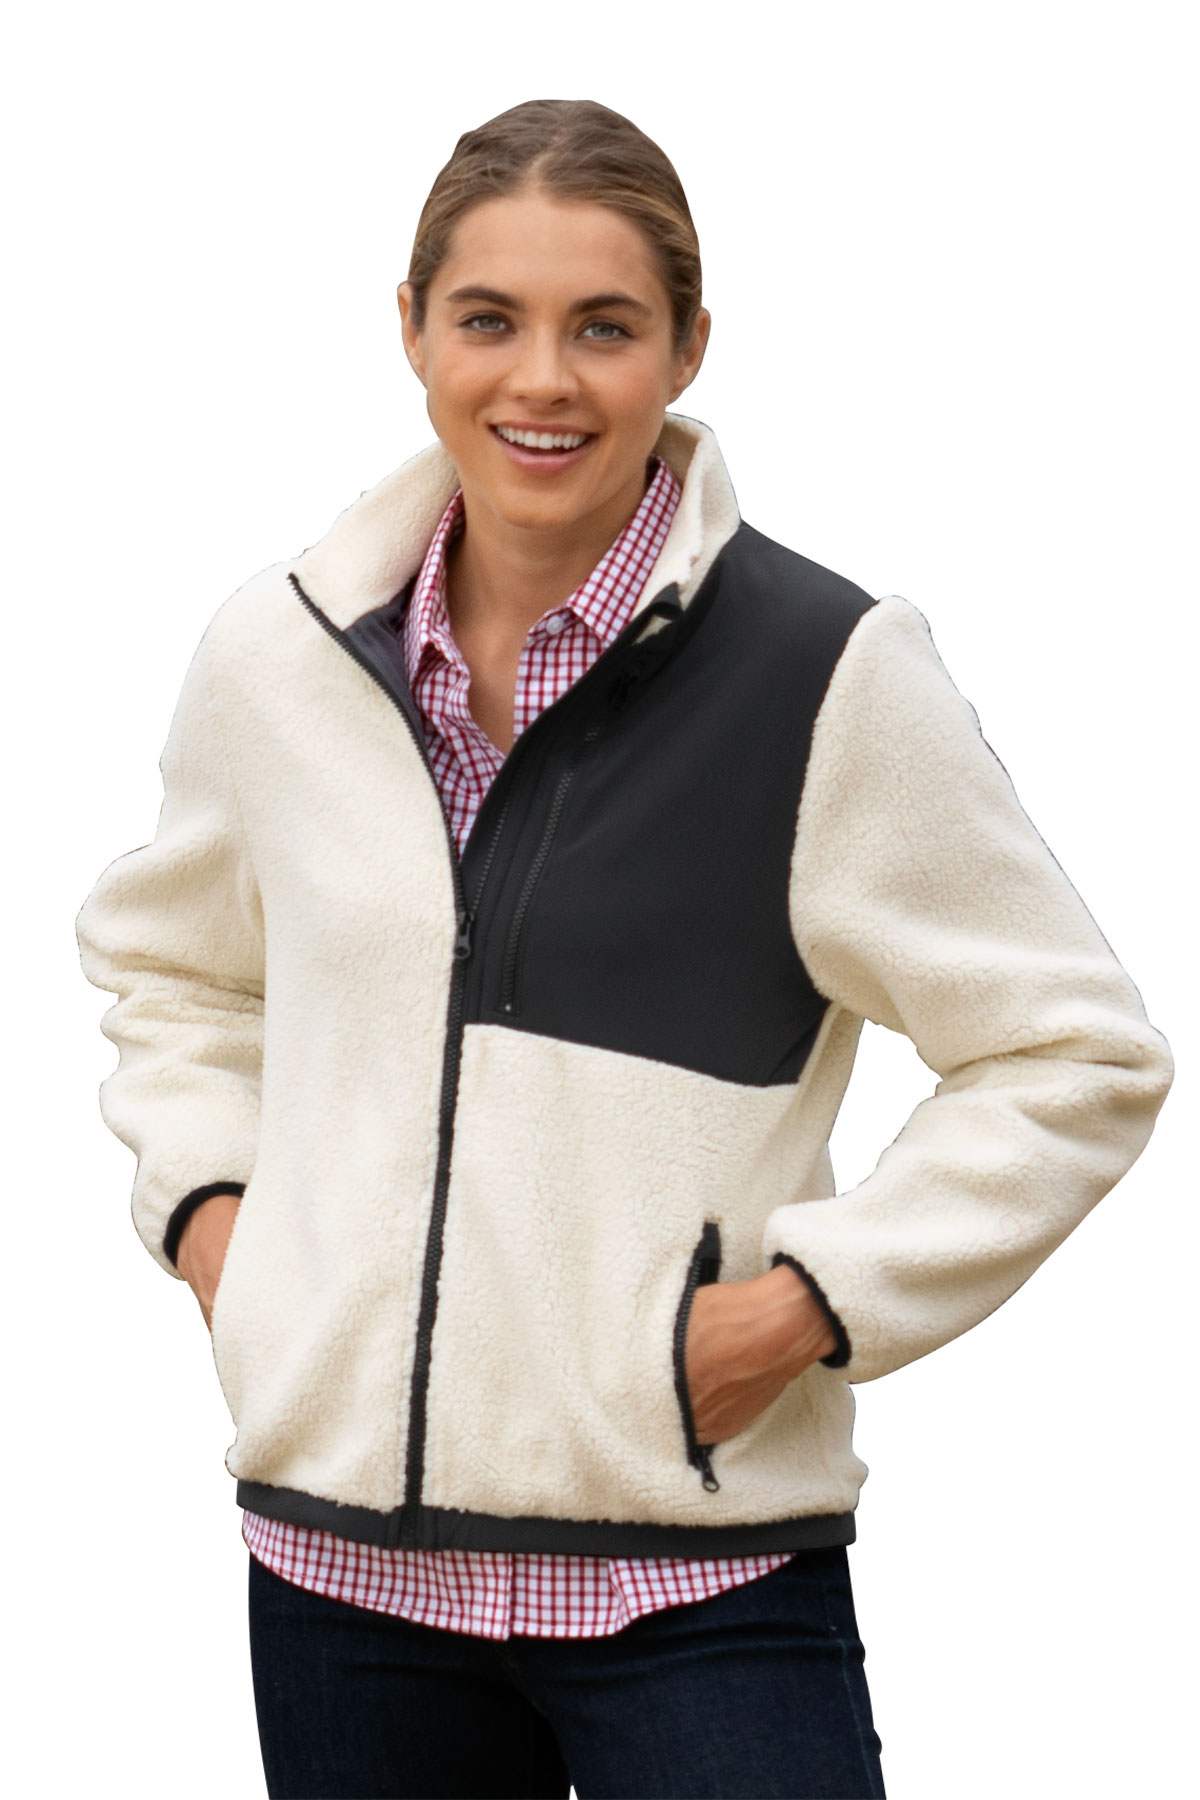 Women's Denali Jacket - image 1 of 5